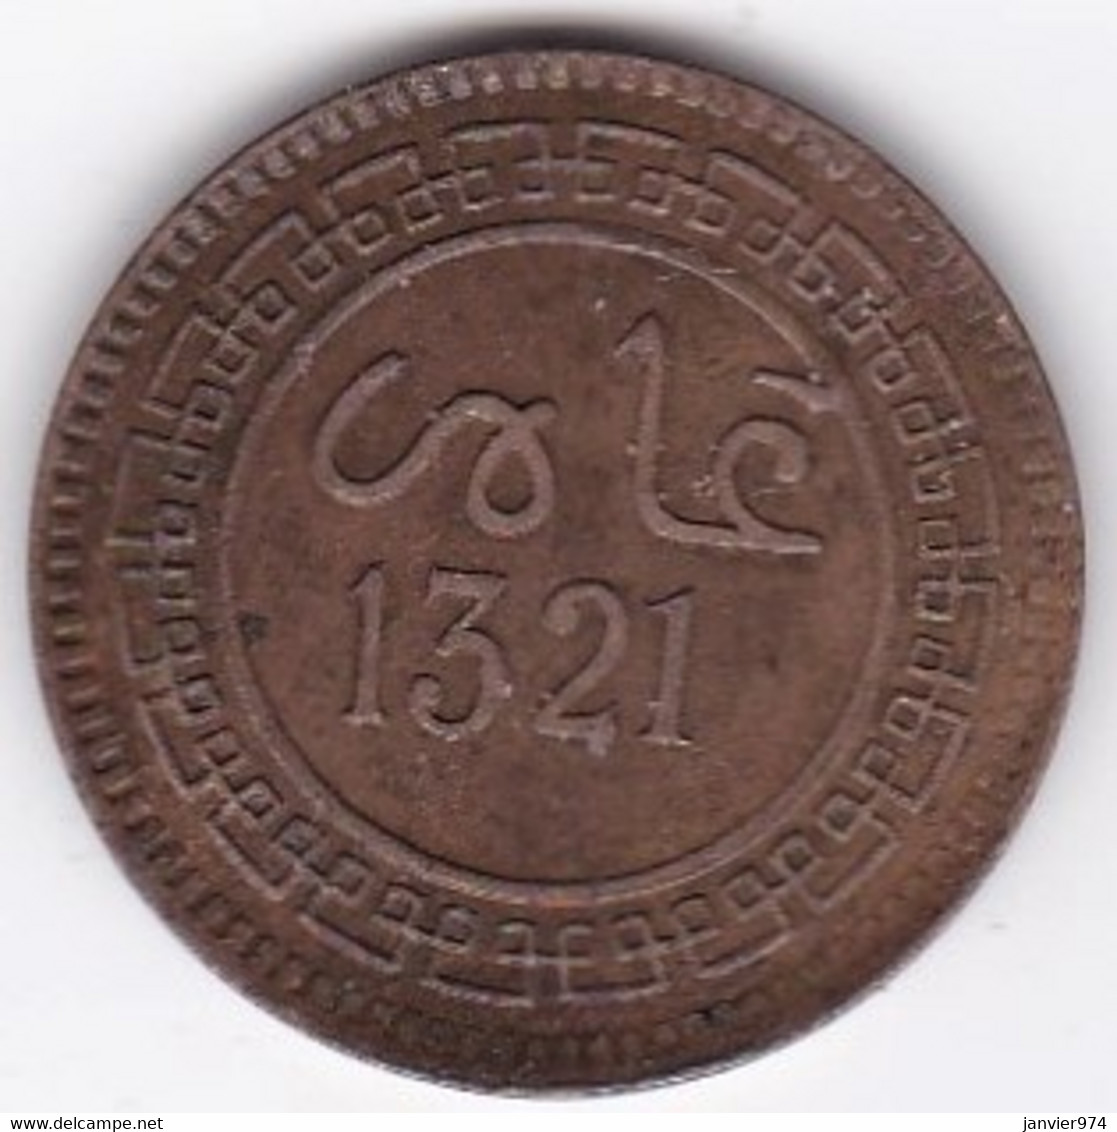 Maroc. 5 Mazunas (Mouzounas) HA 1321 (1903) Birmingham. Abdul Aziz I. Frappe Médaille. Bronze. - Morocco